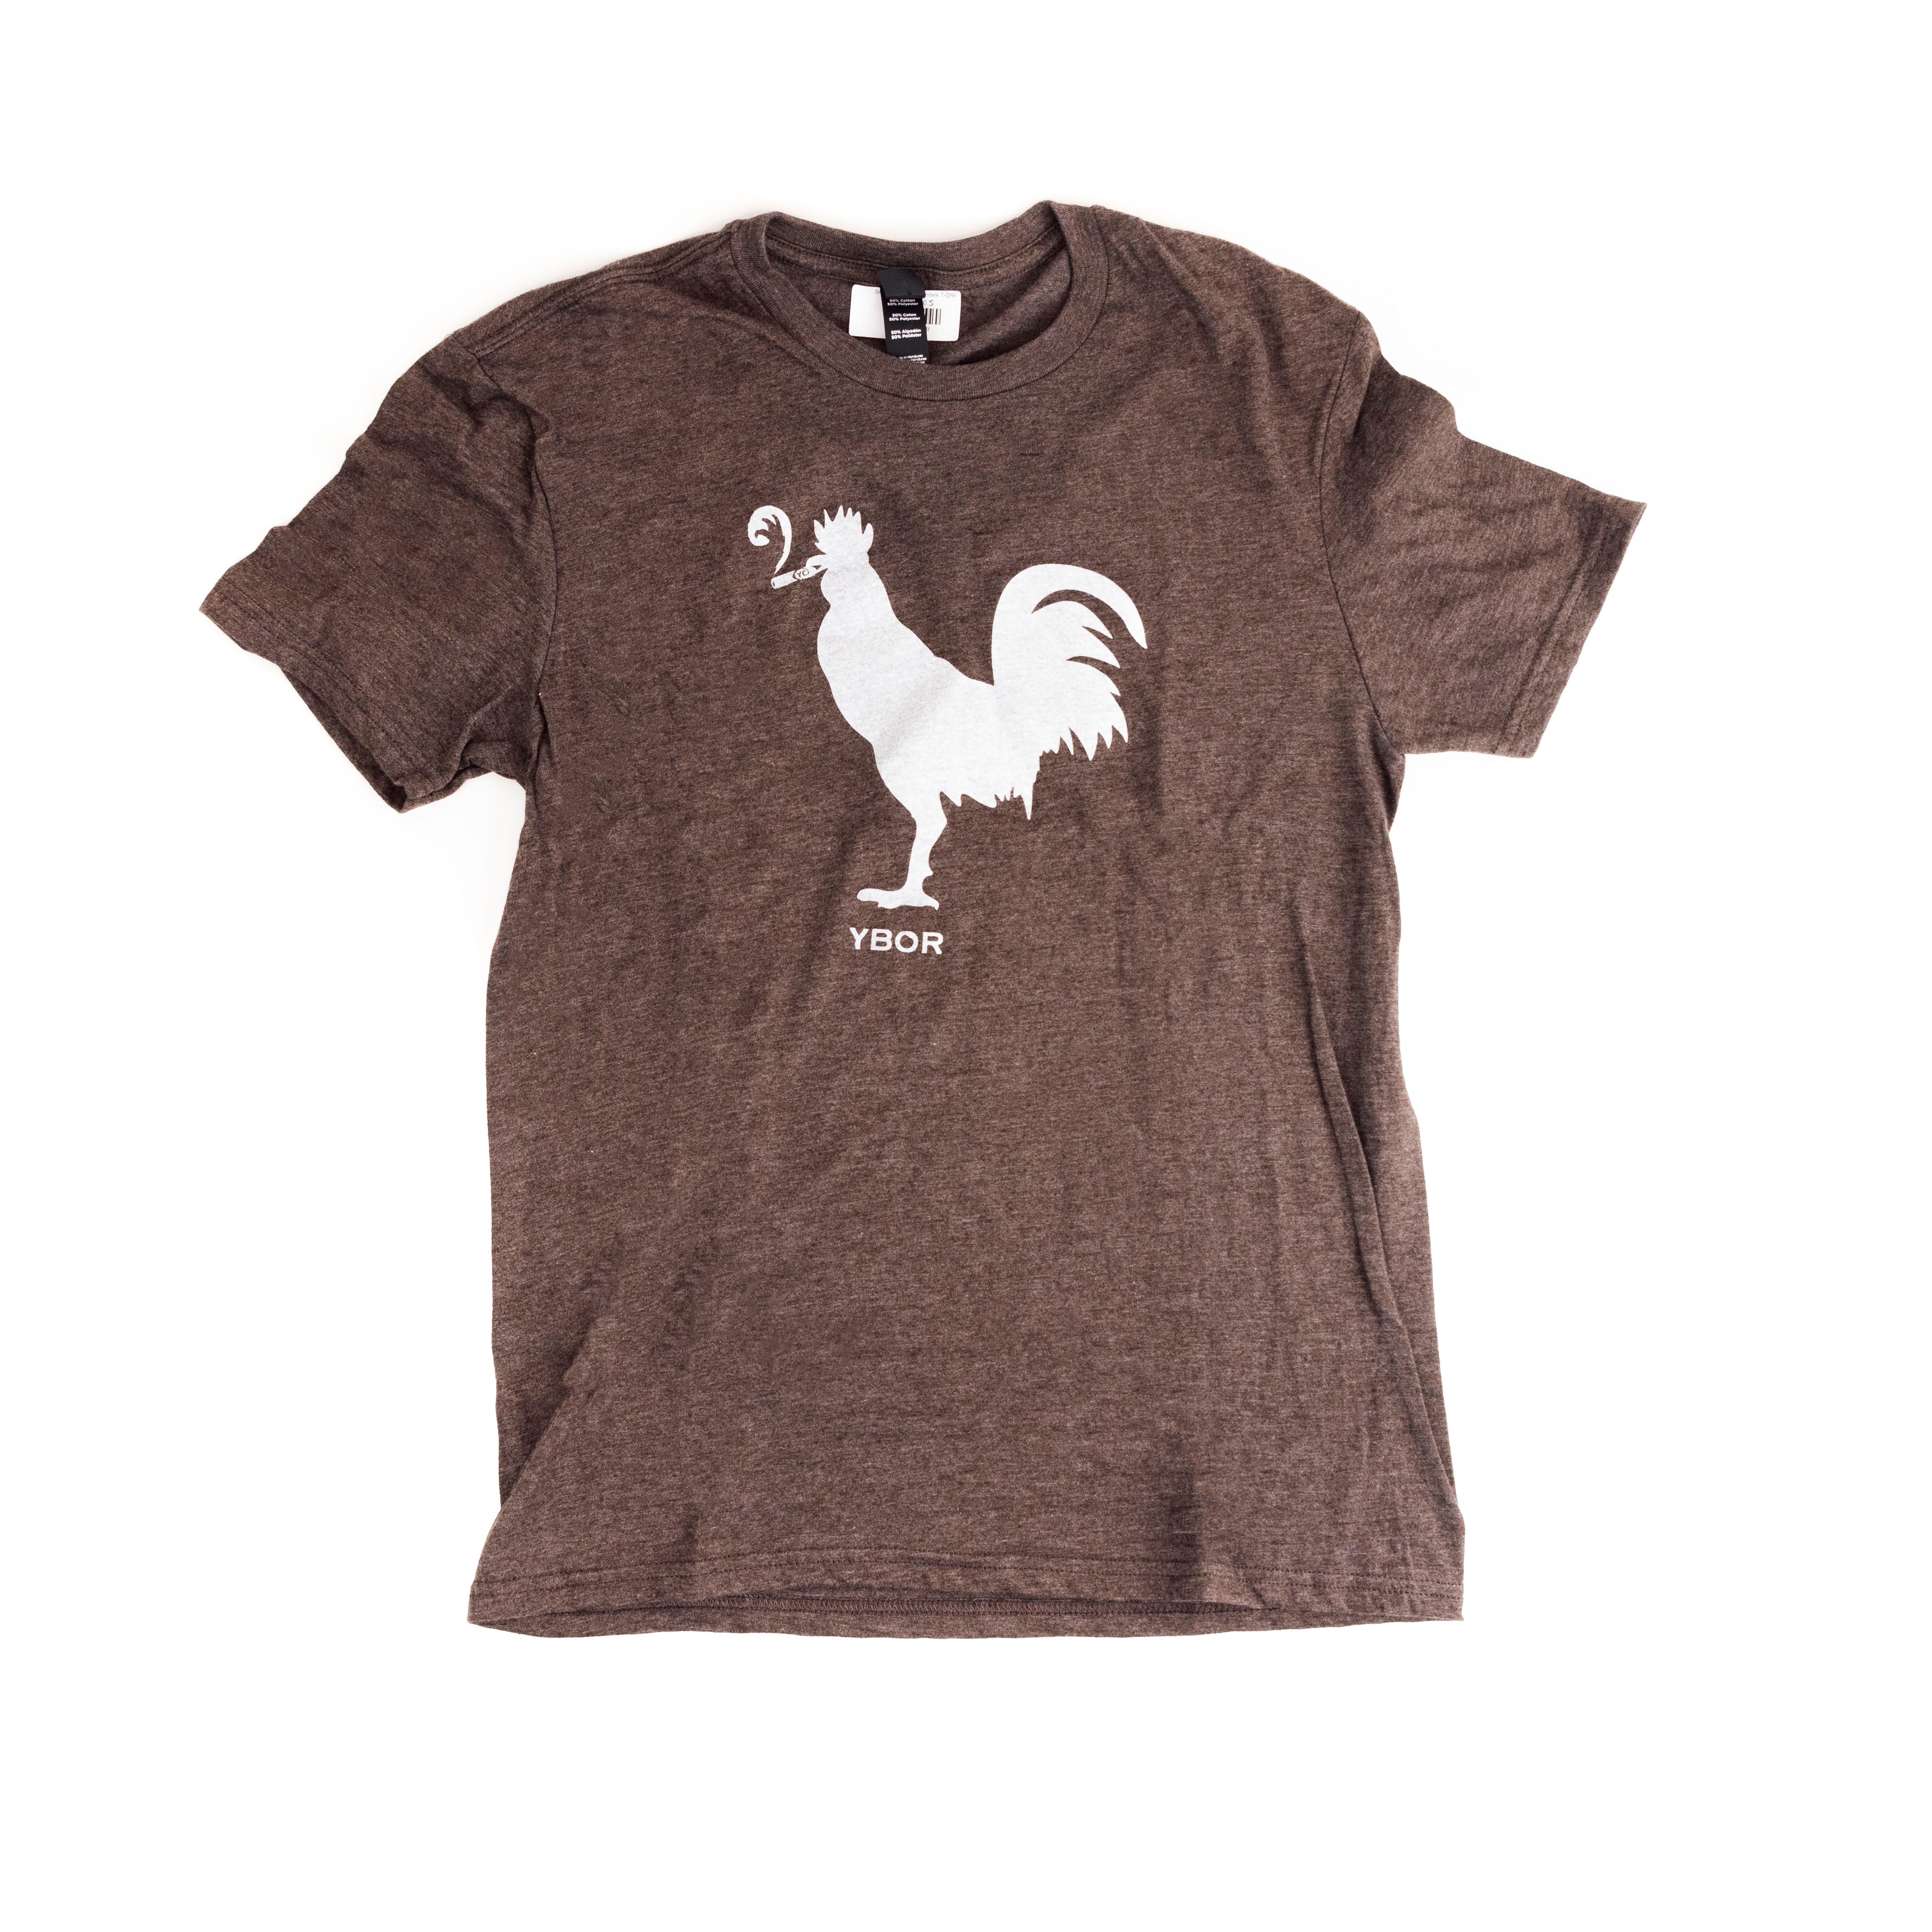 Smokin' Rooster Unisex T-Shirt - Cappuccino